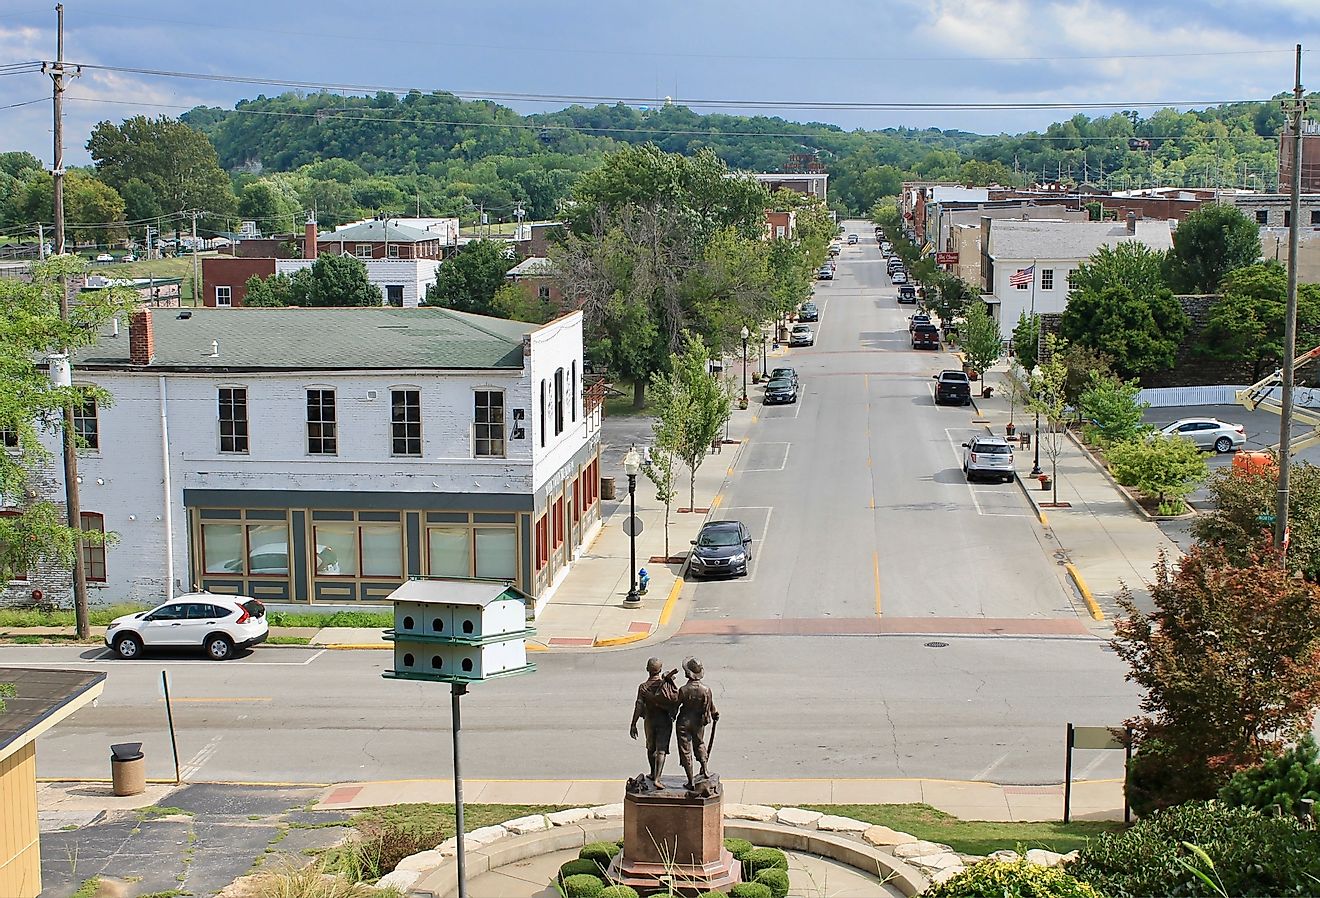 Overlooking downtown Hannibal, Missouri.